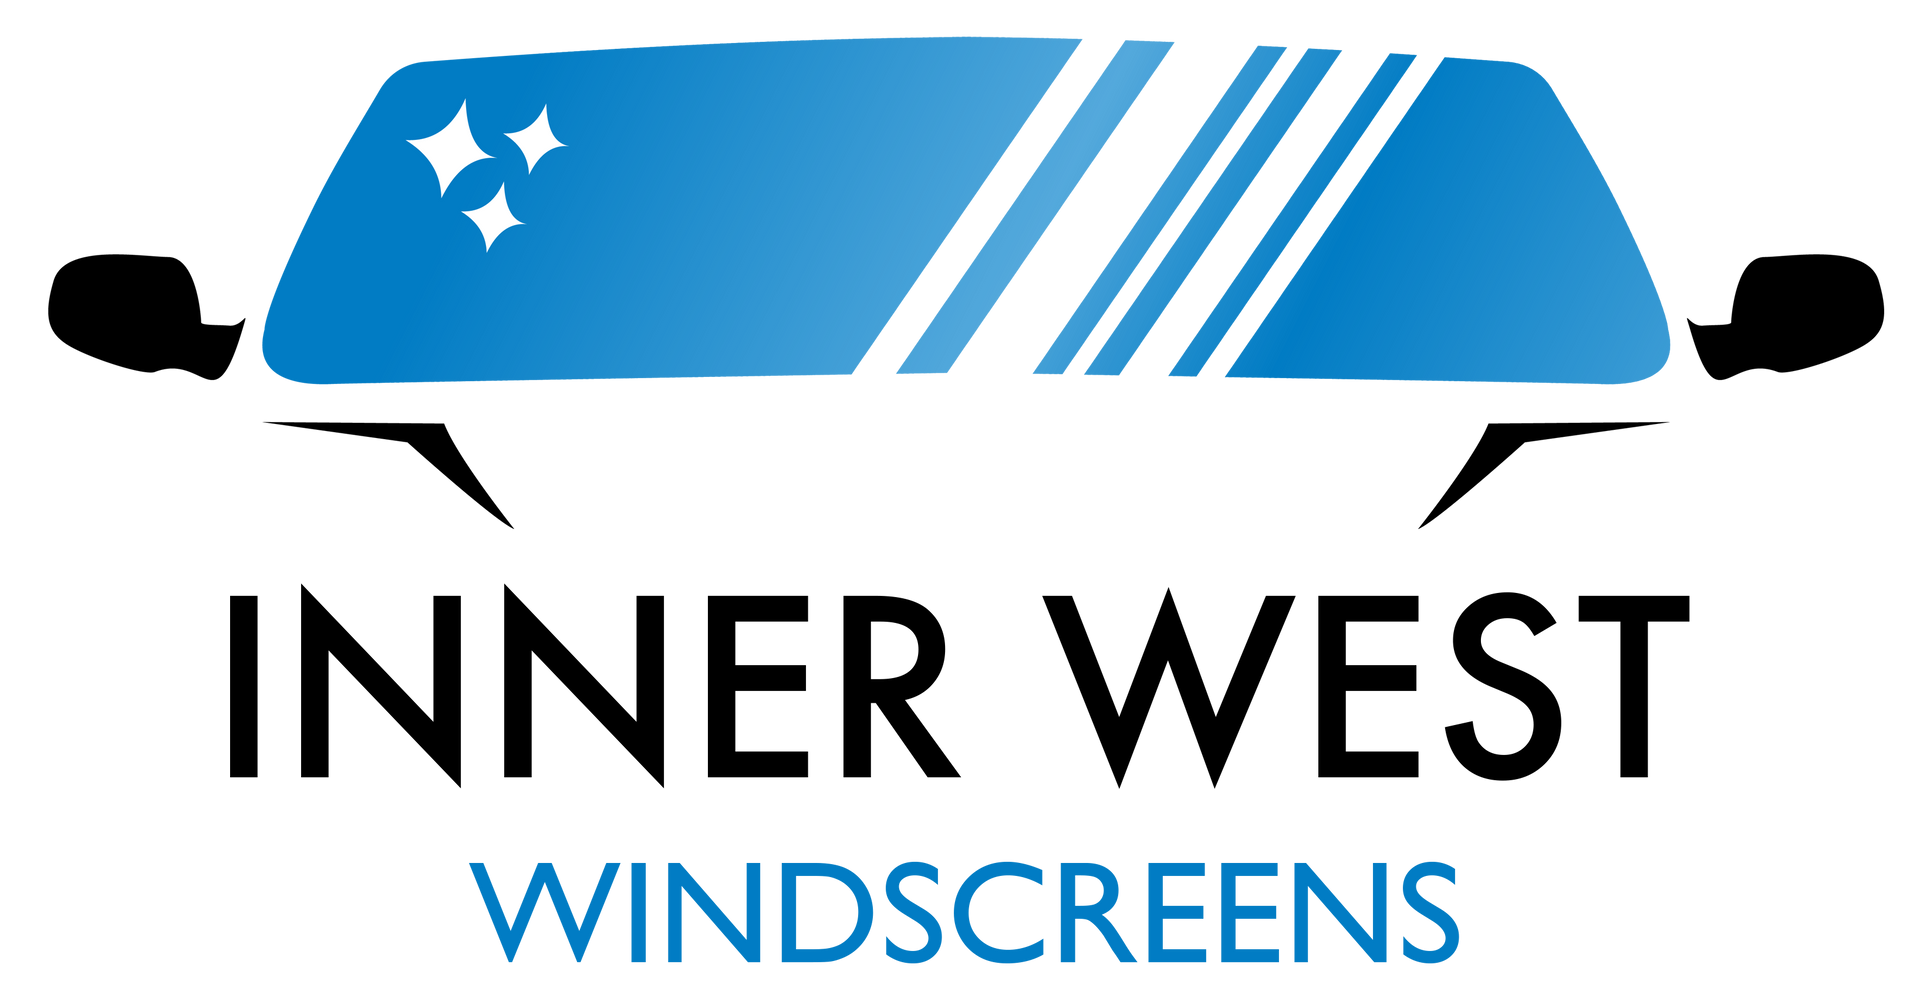 Windscreen Medics